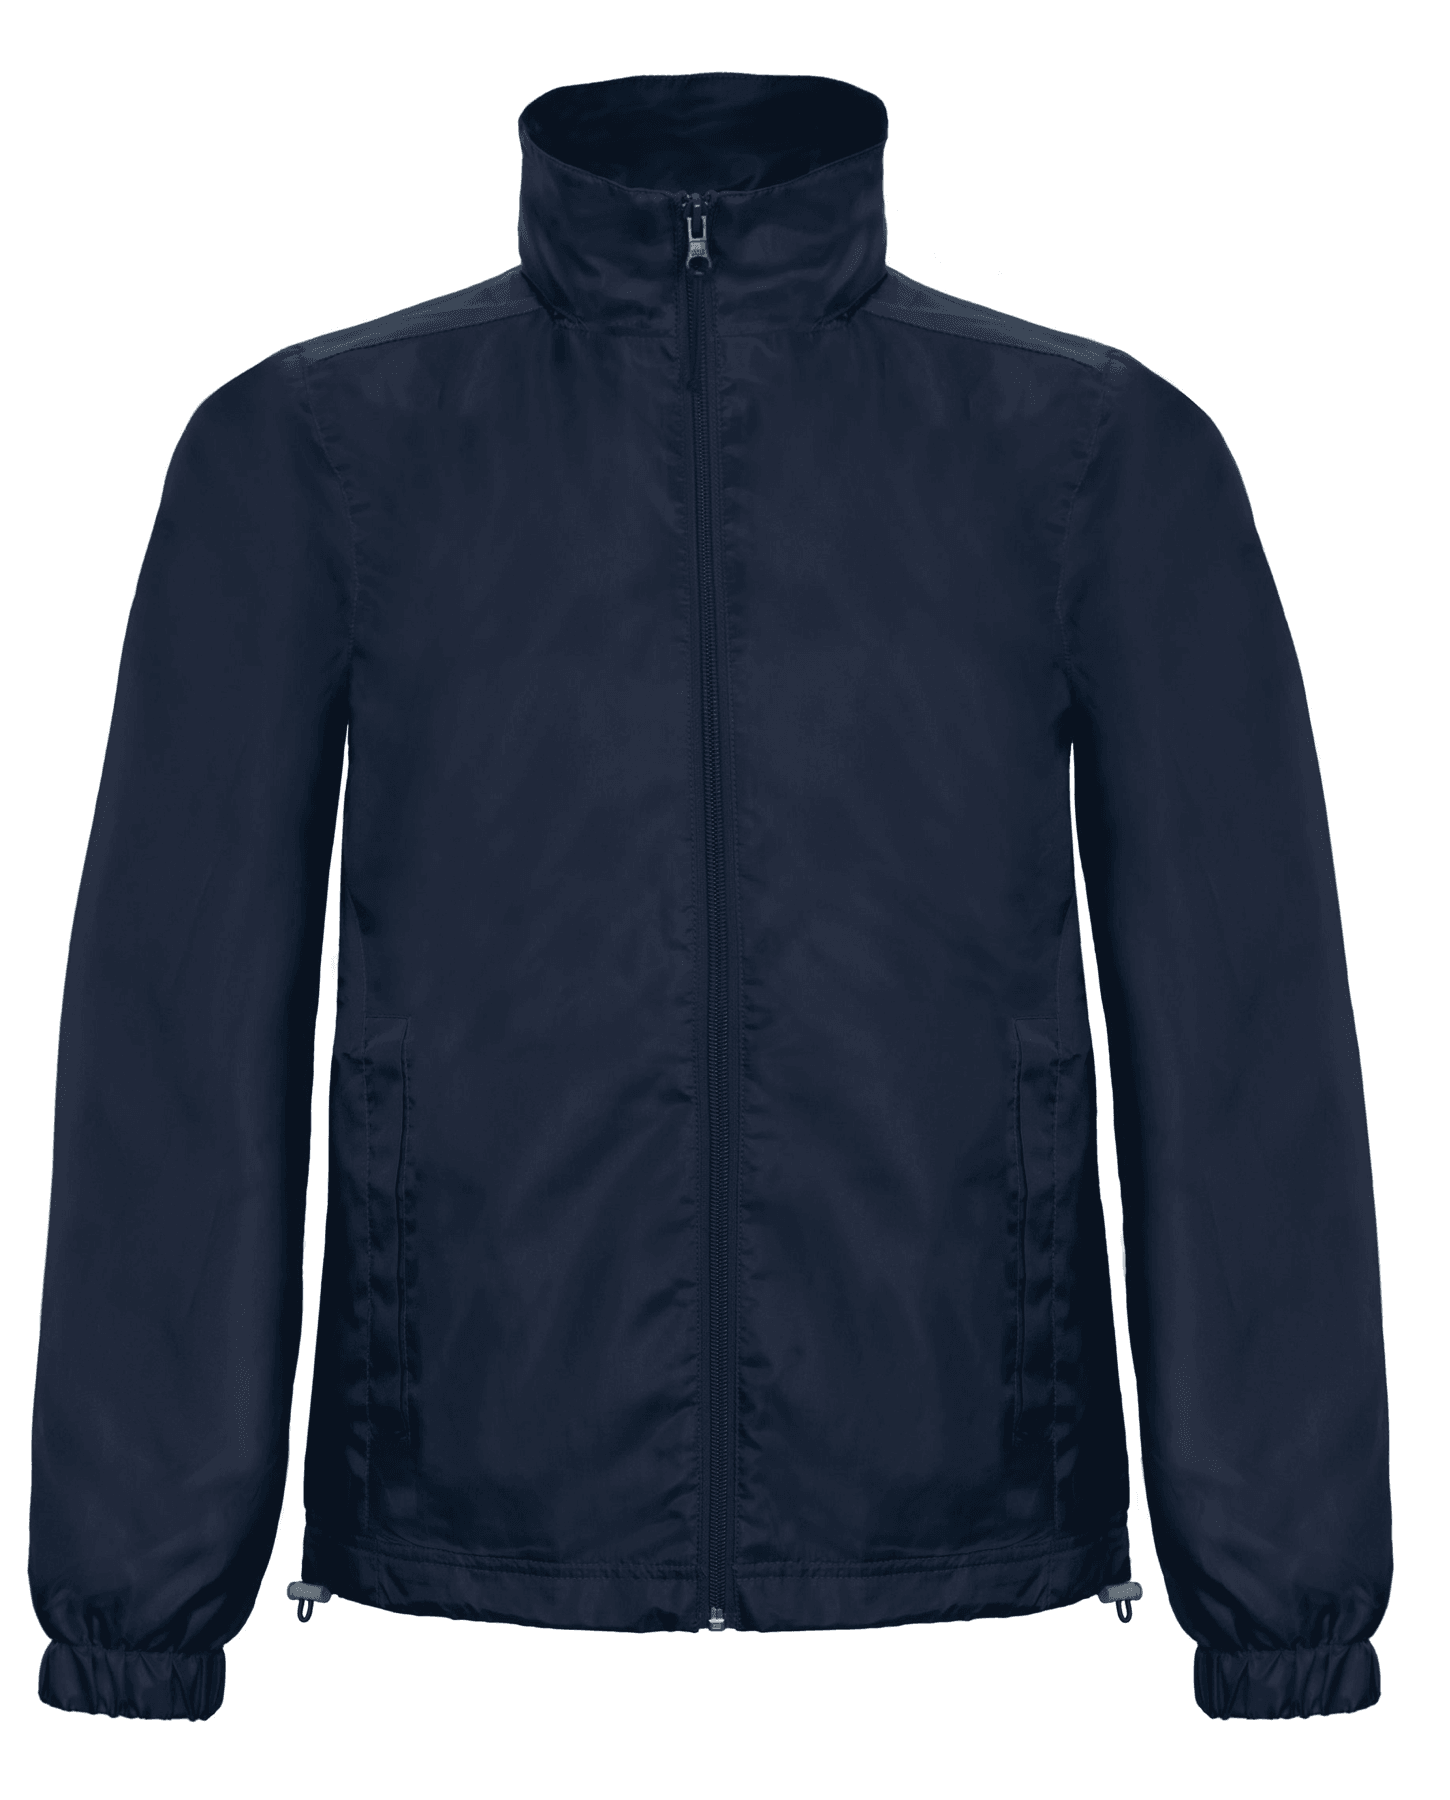 ISC – Windbreaker Jacket (Ladies)